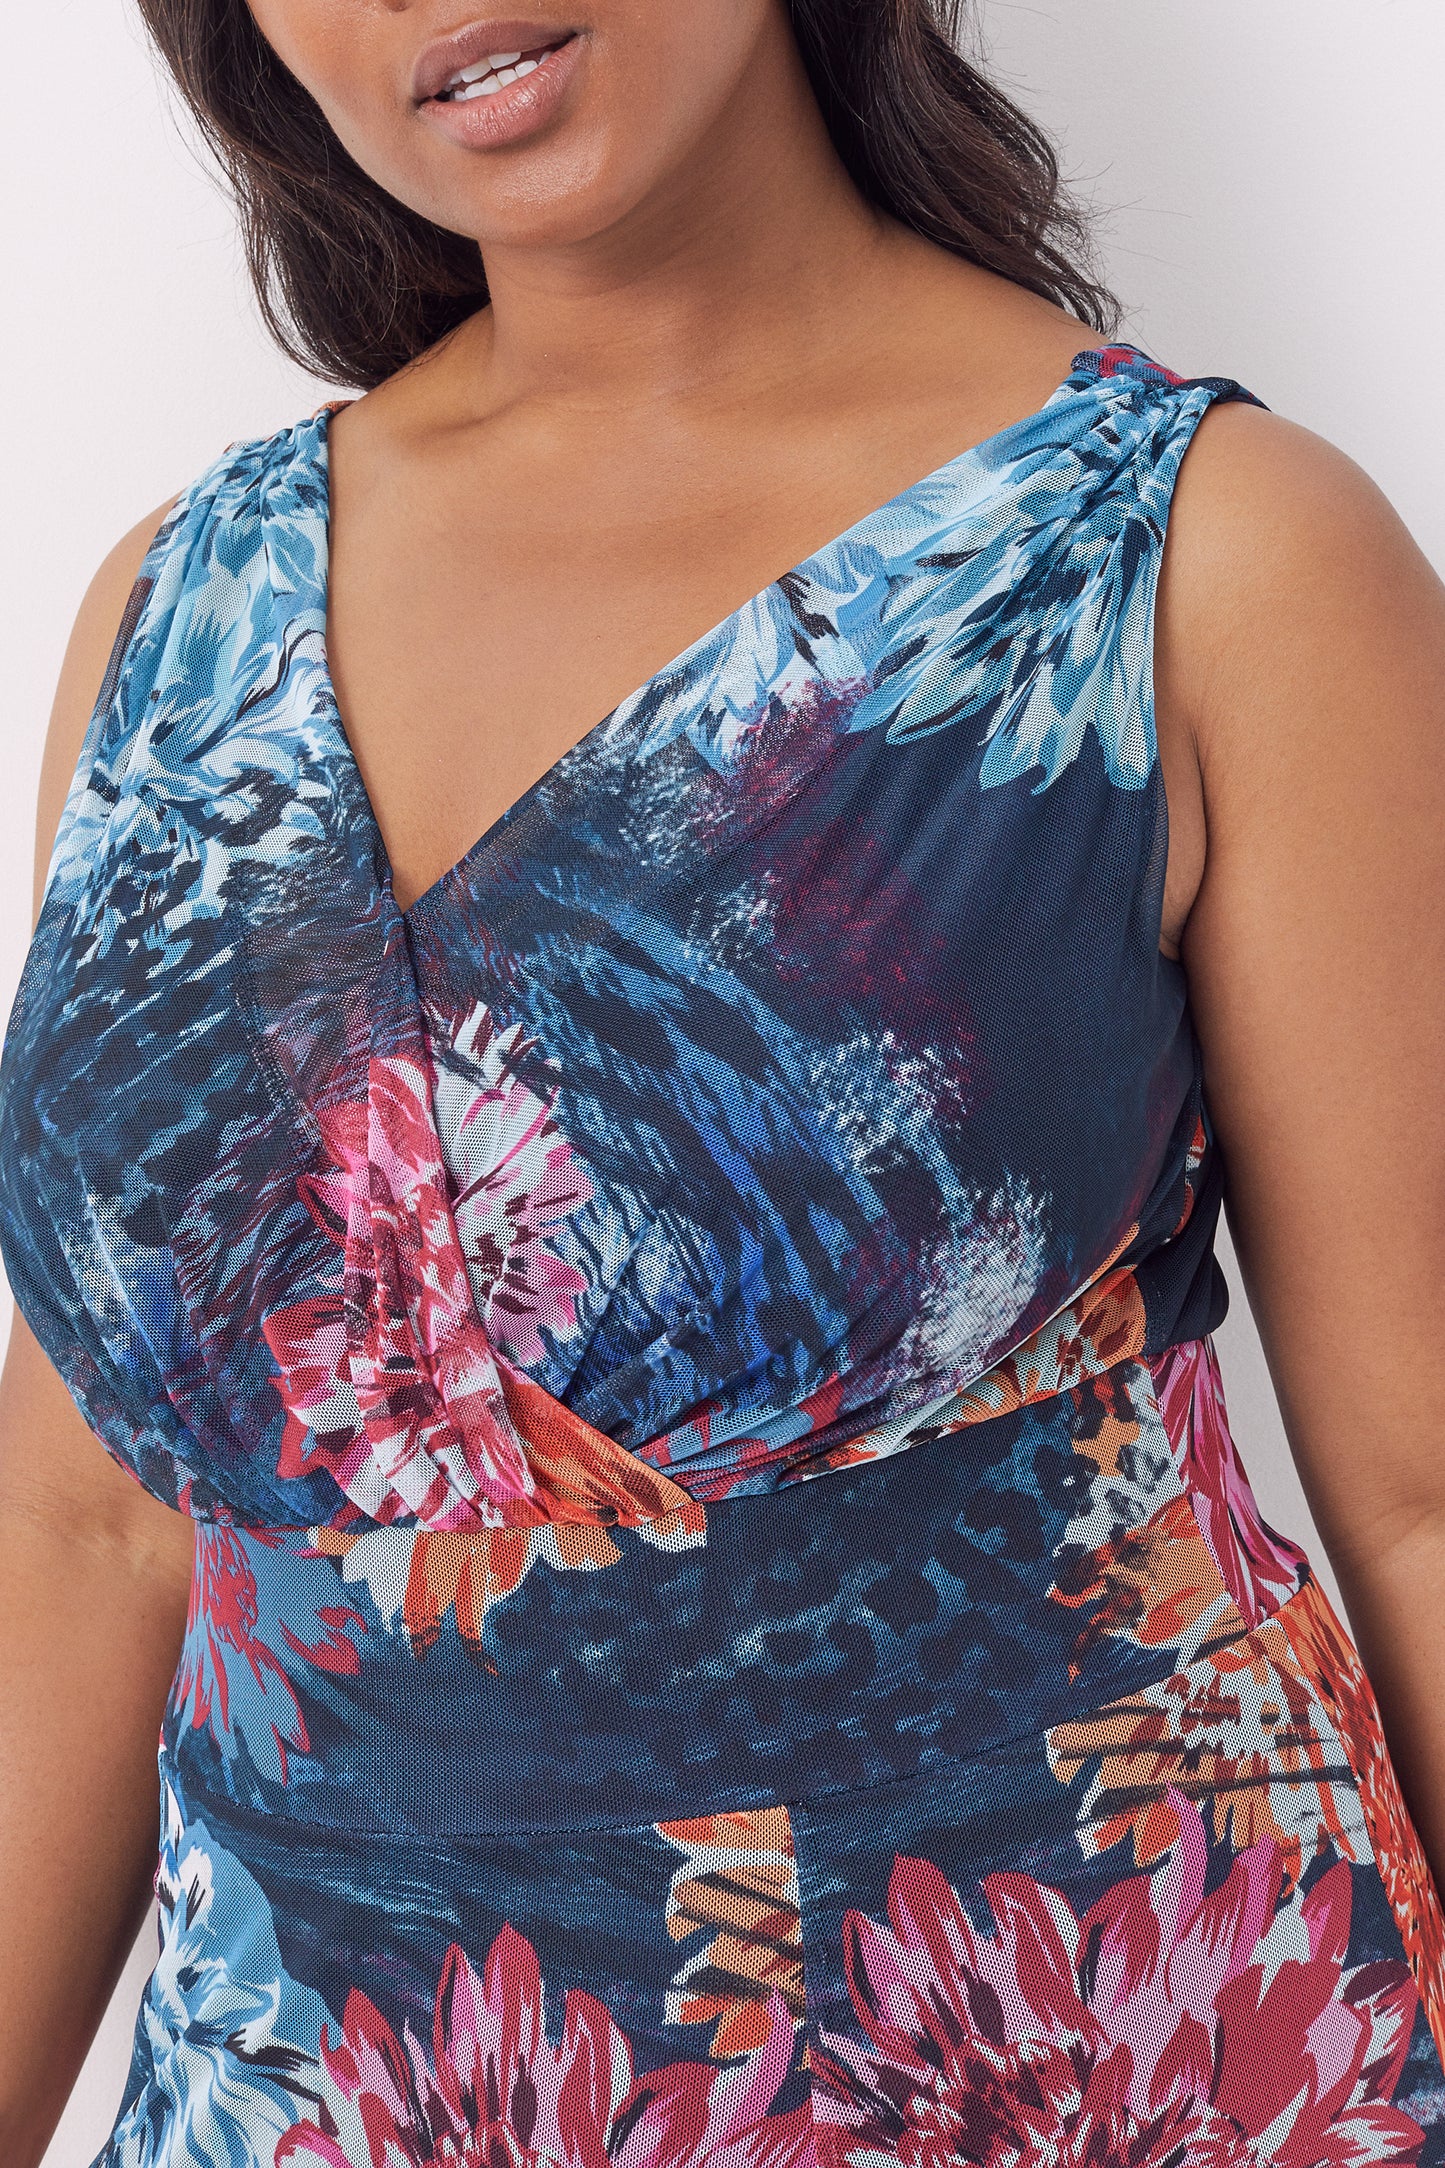 Load image into Gallery viewer, Amelia Blue Multi Print Mesh Maxi Dress
